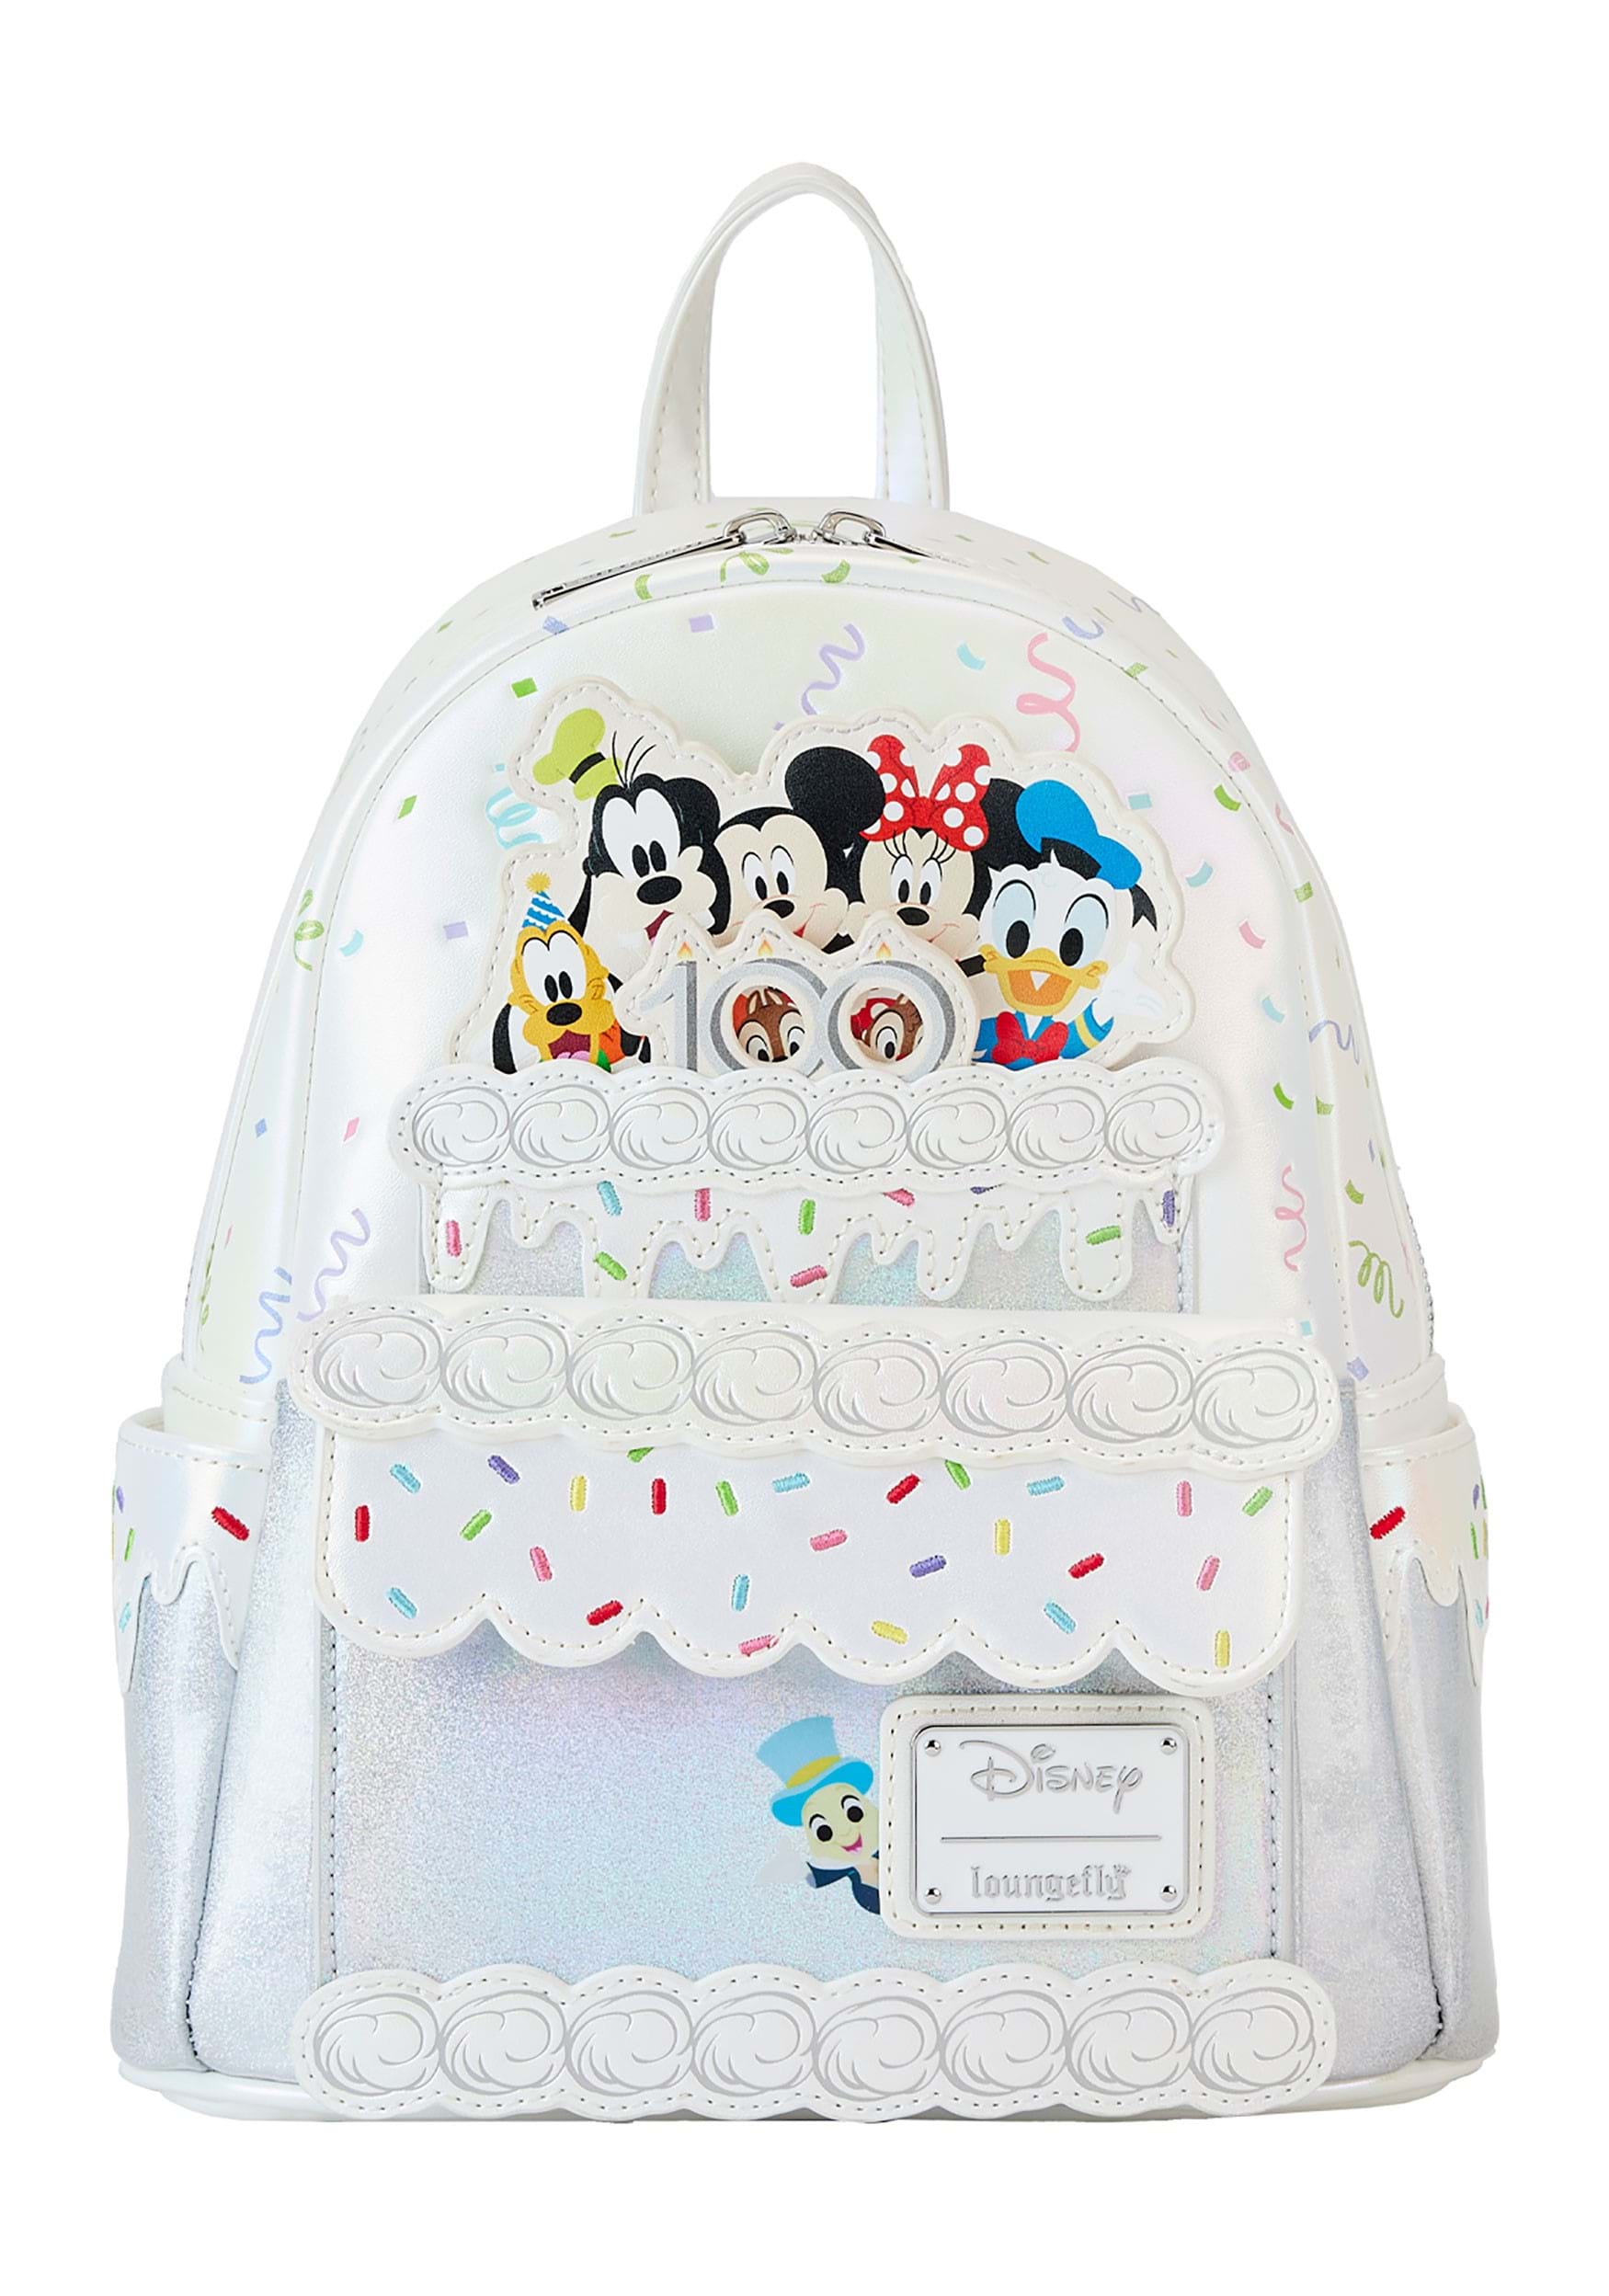 Disney 100 Celebration Cake Mini Backpack by Loungefly | Disney